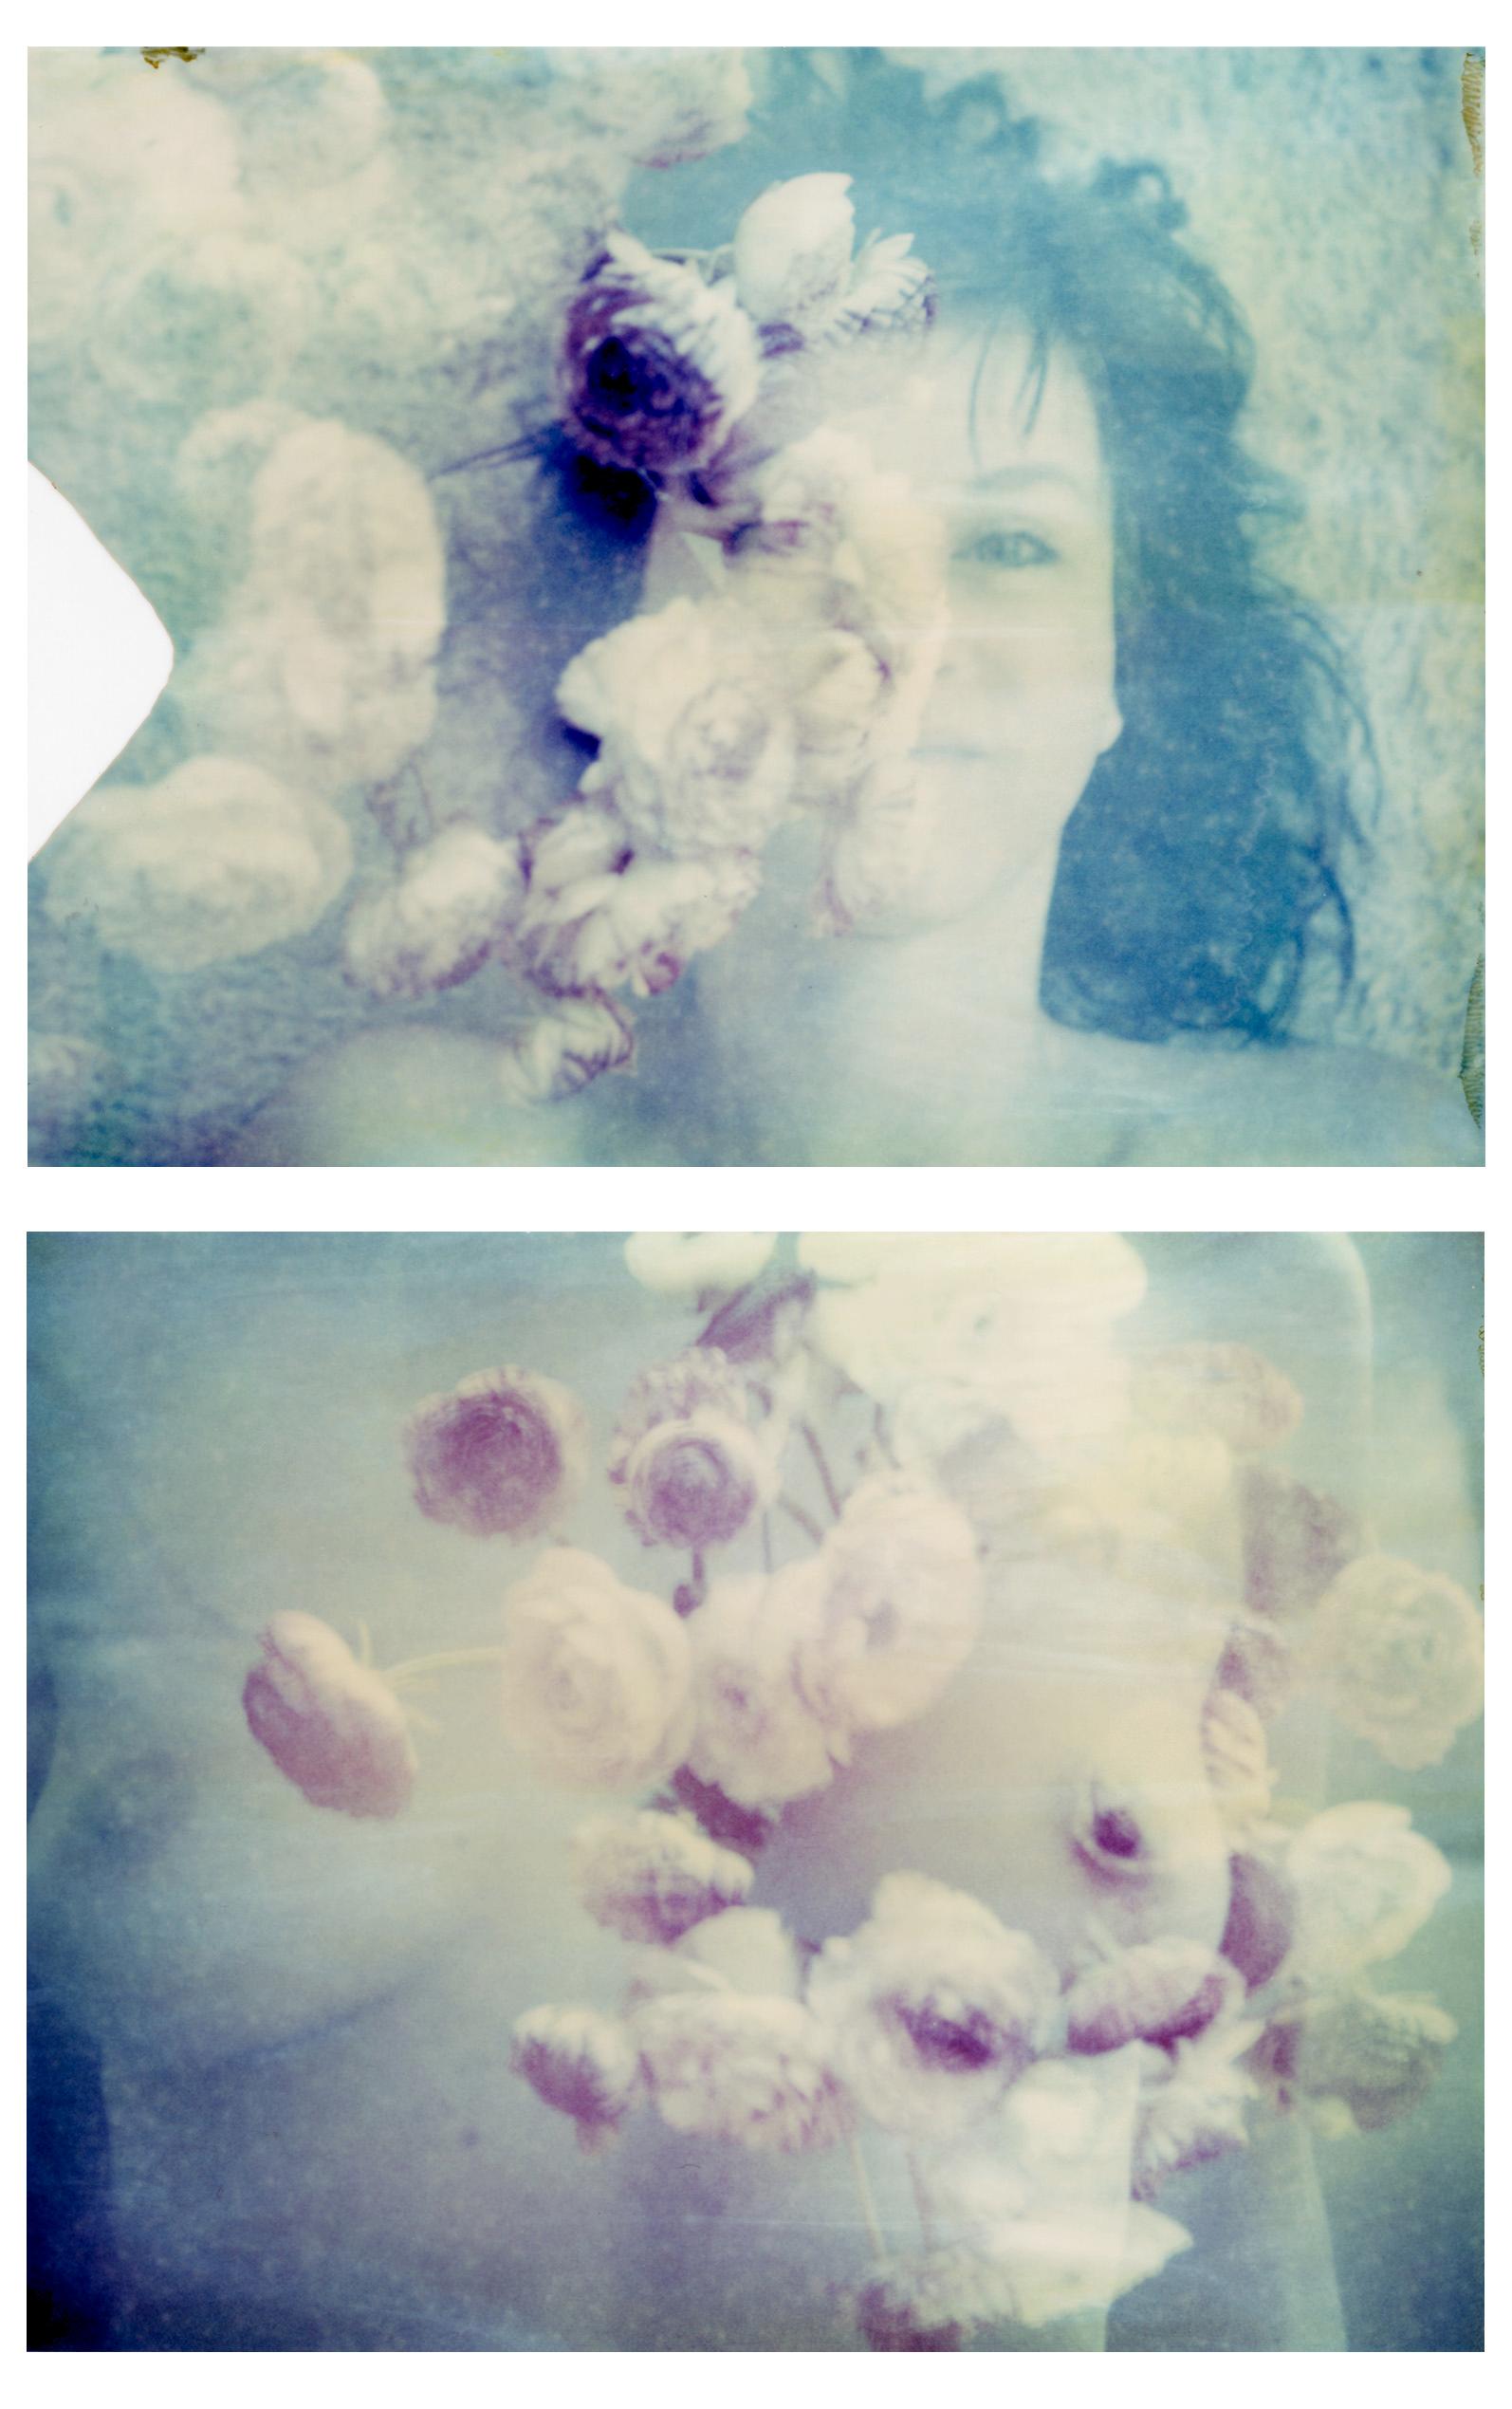 RANONKEL #diptyque [De la série Need to Be] - Polaroid, nu, portrait